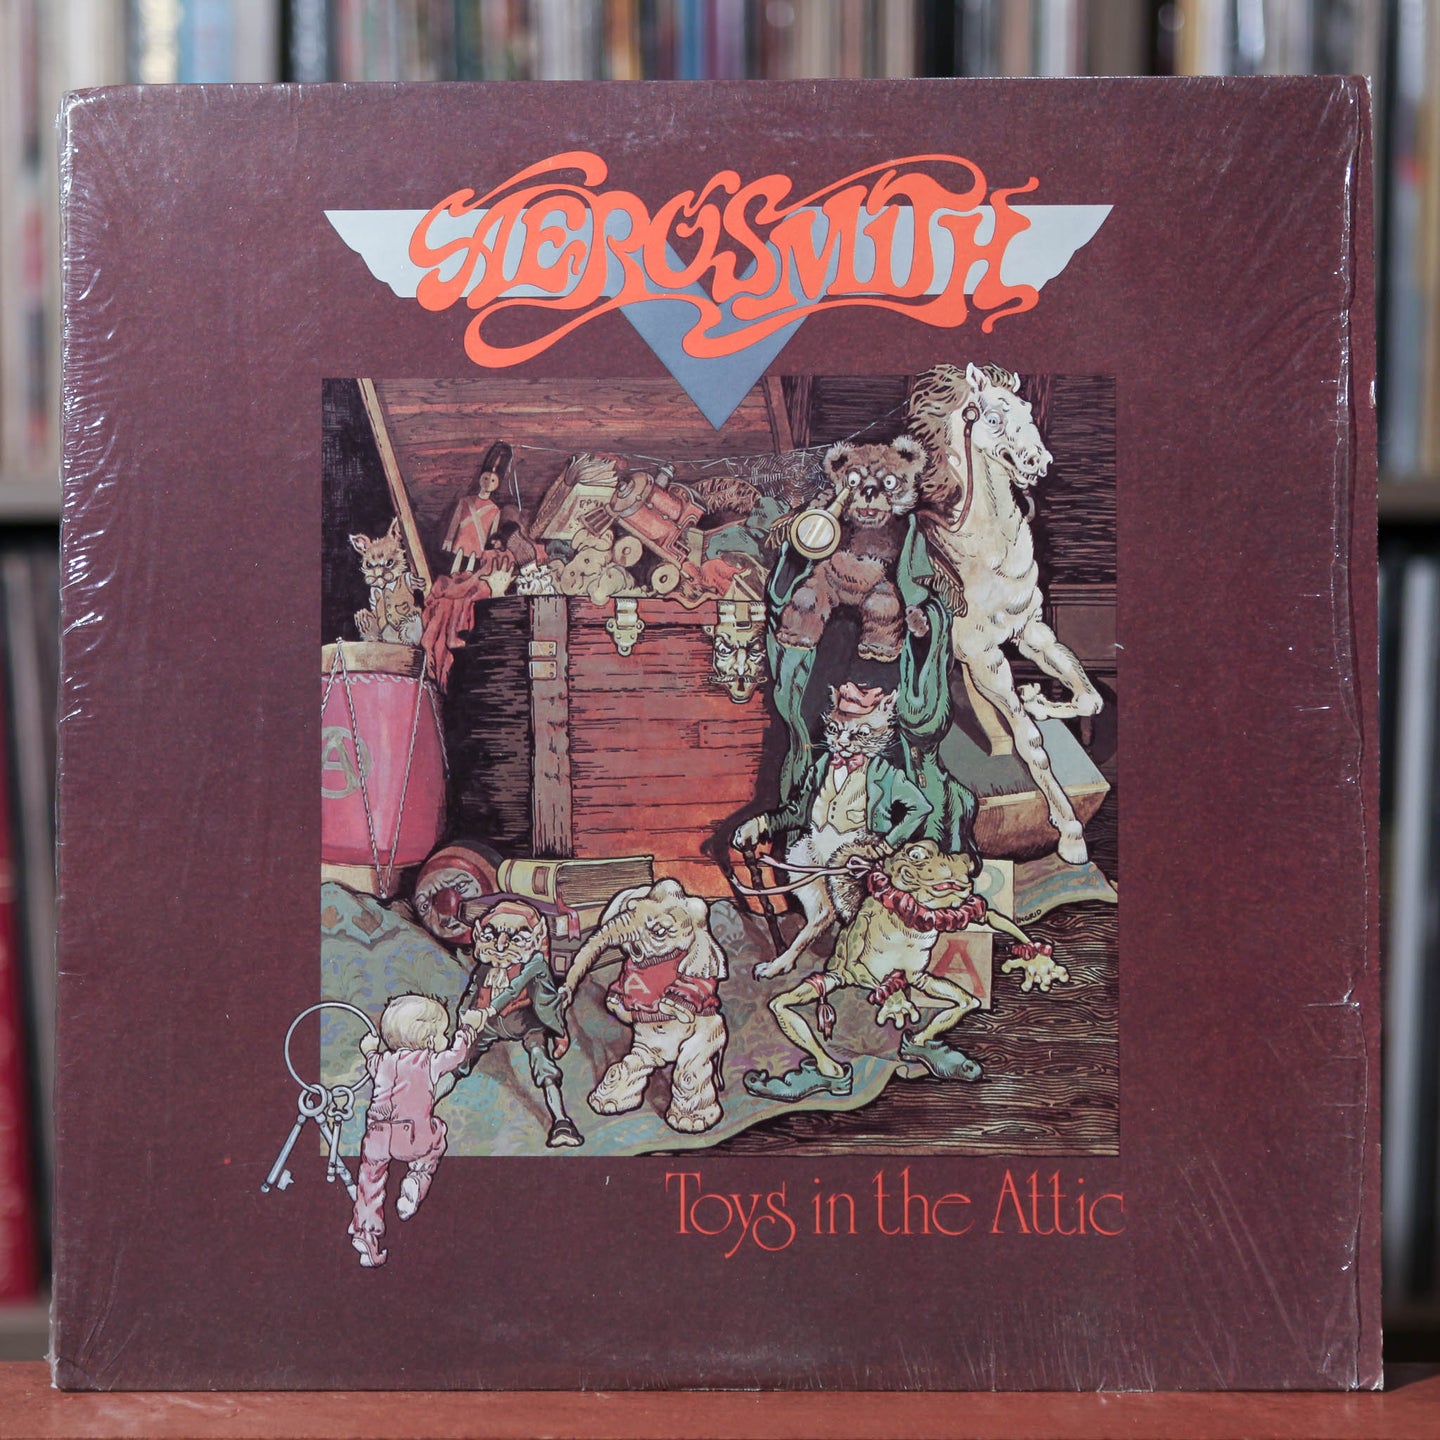 Aerosmith - Toys In The Attic - 1975 CBS, VG+/VG+ w/Shrink